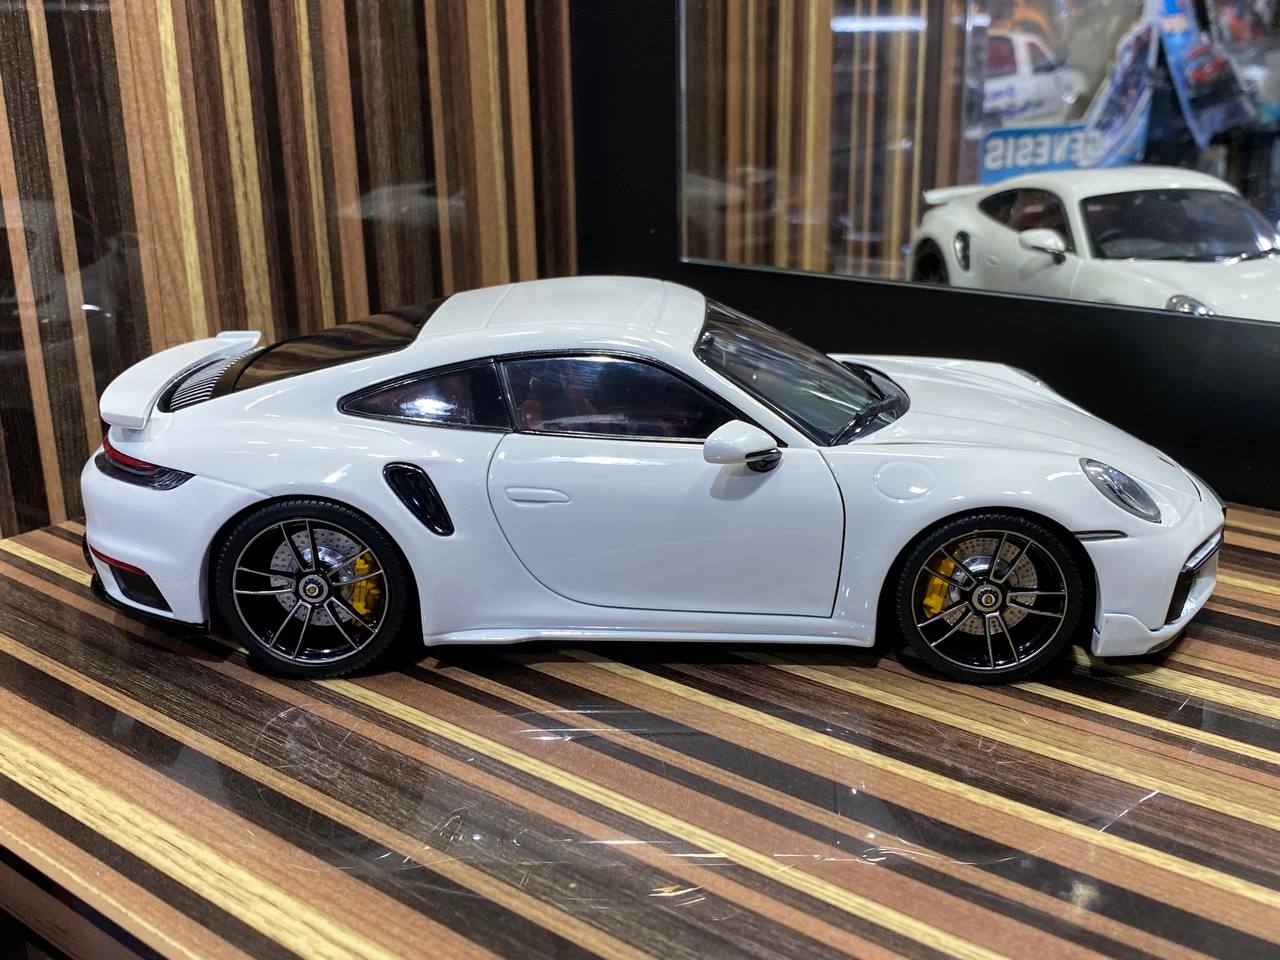 Minichamps 1/18 Porsche 911 Turbo S - All Opening Diecast (White)